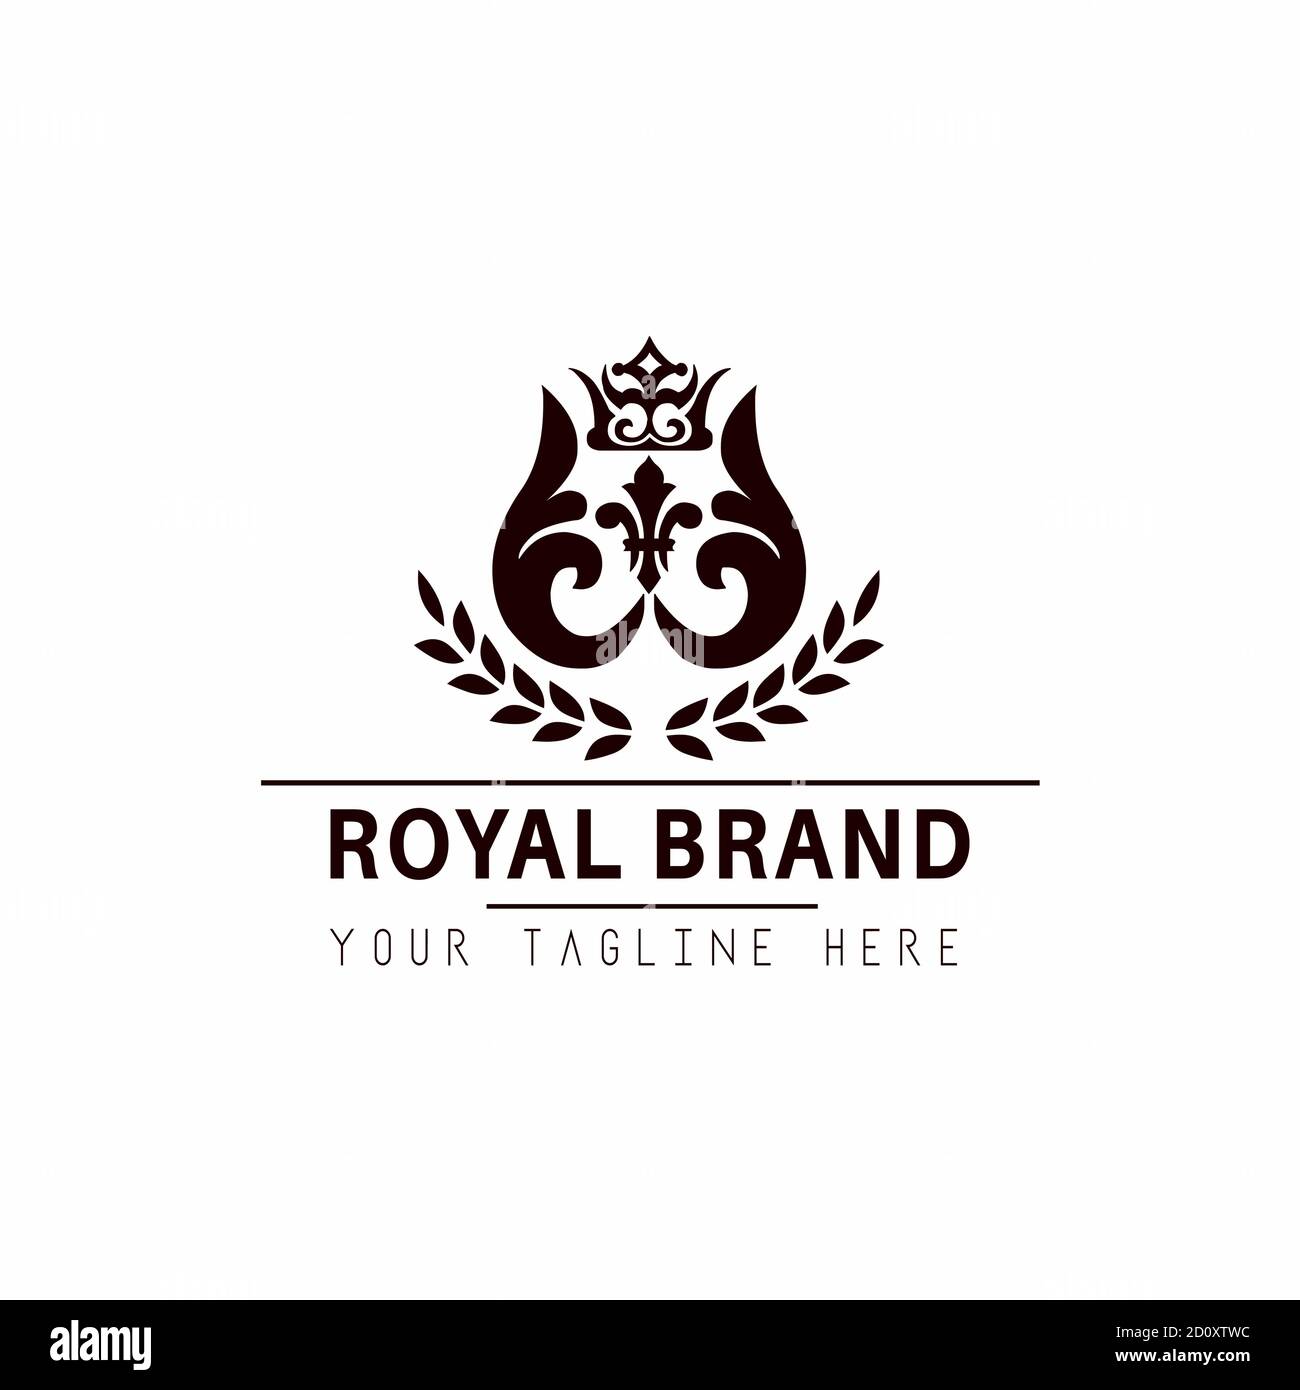 Royal brand and luxury brand illustration vector logo design old ...